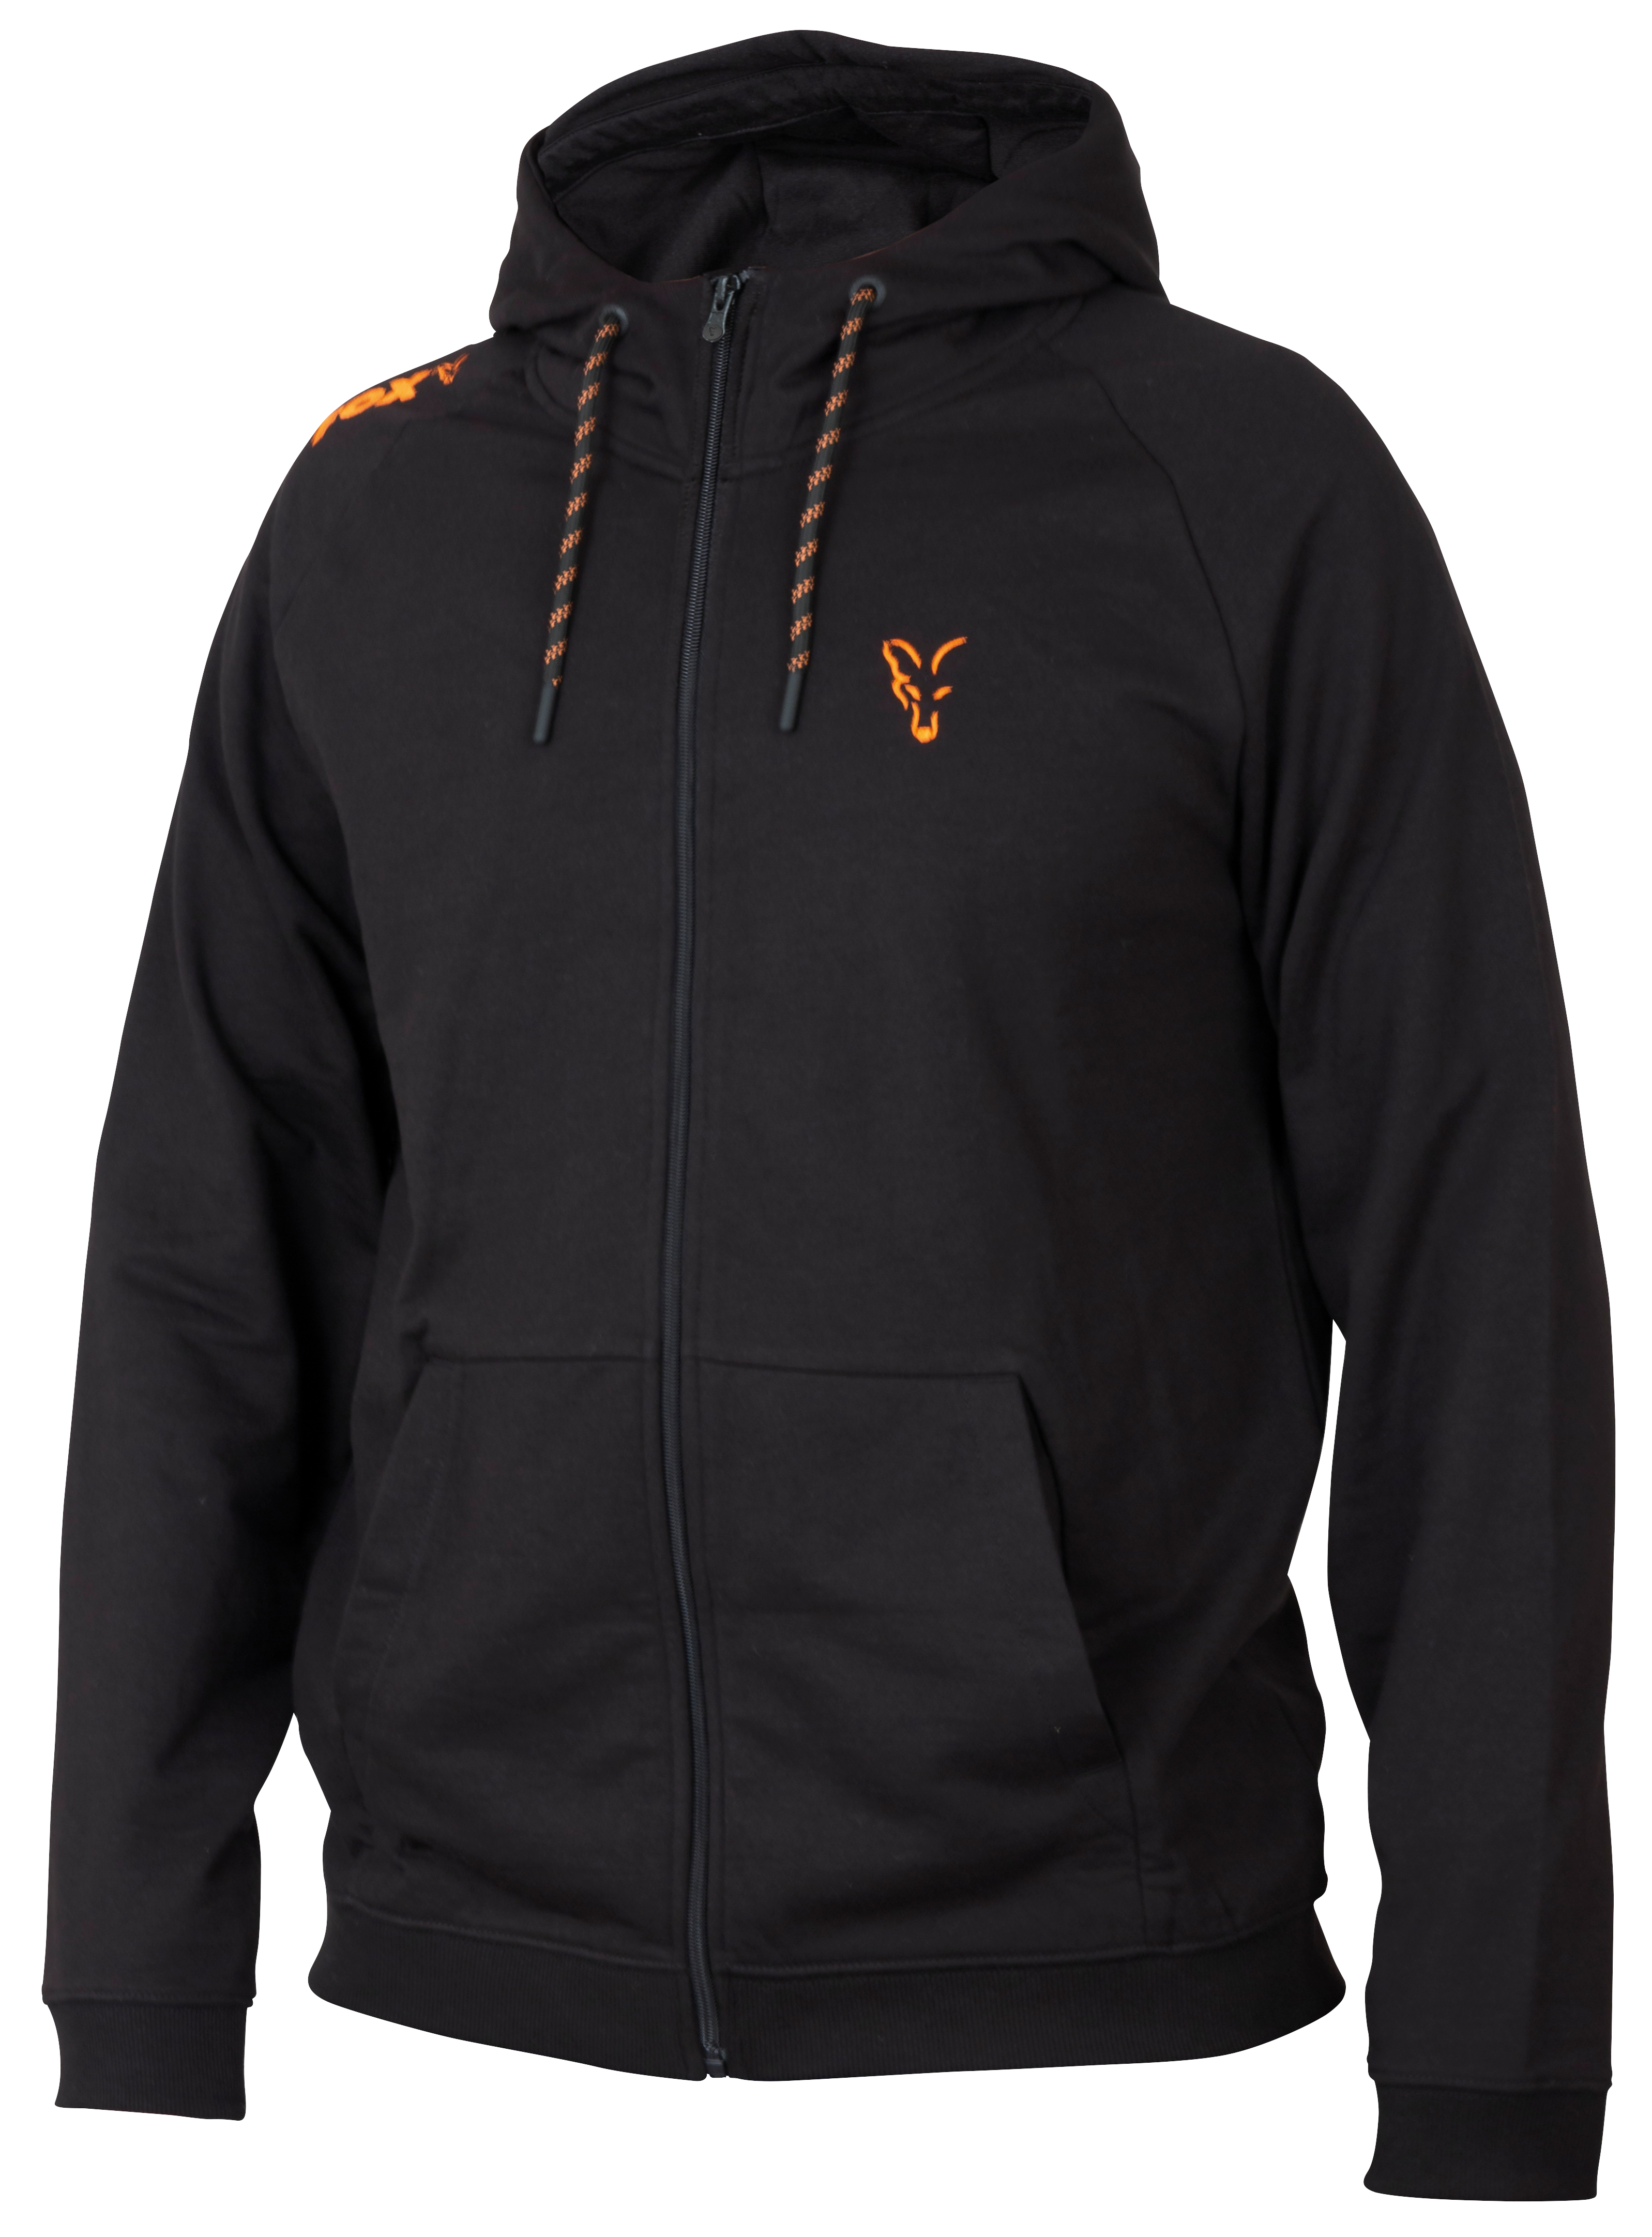 Fox Collection Black / Orange Lightweight hoodie Magasított nyakú Fekete/Narancs kapucnis pulóver - XXL